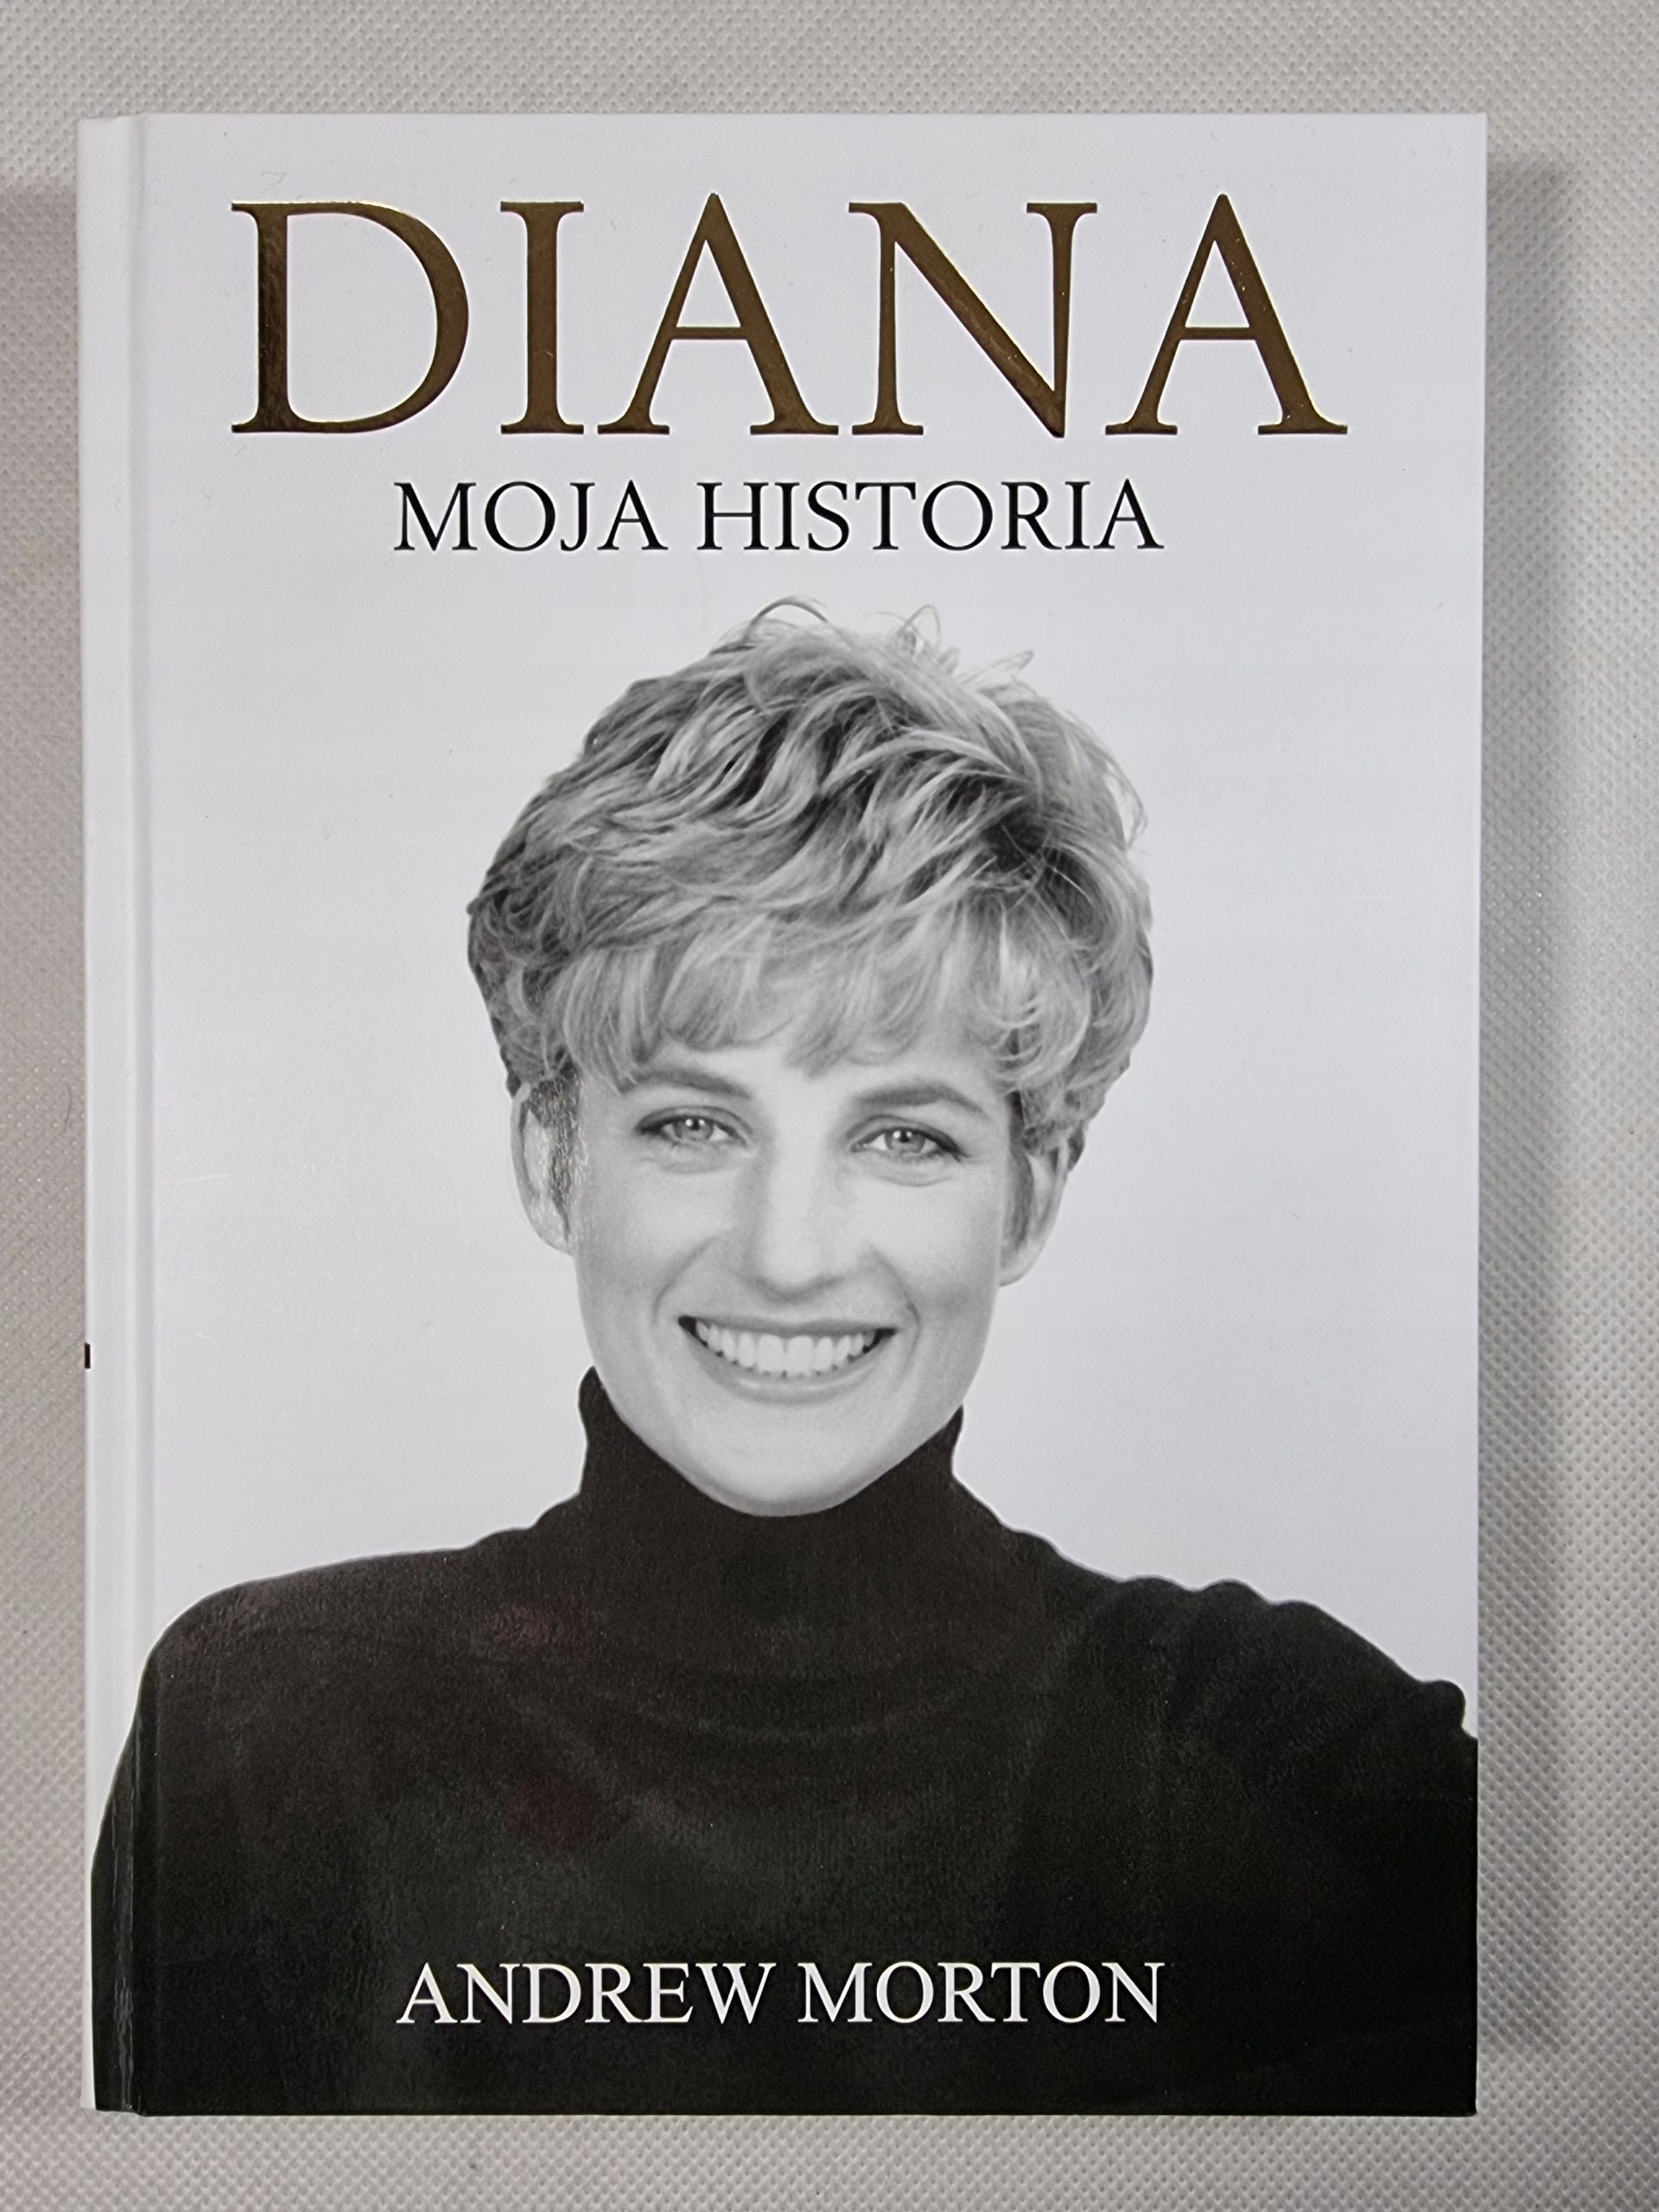 TWARDA / Diana - Moja Historia / Andrew Morton